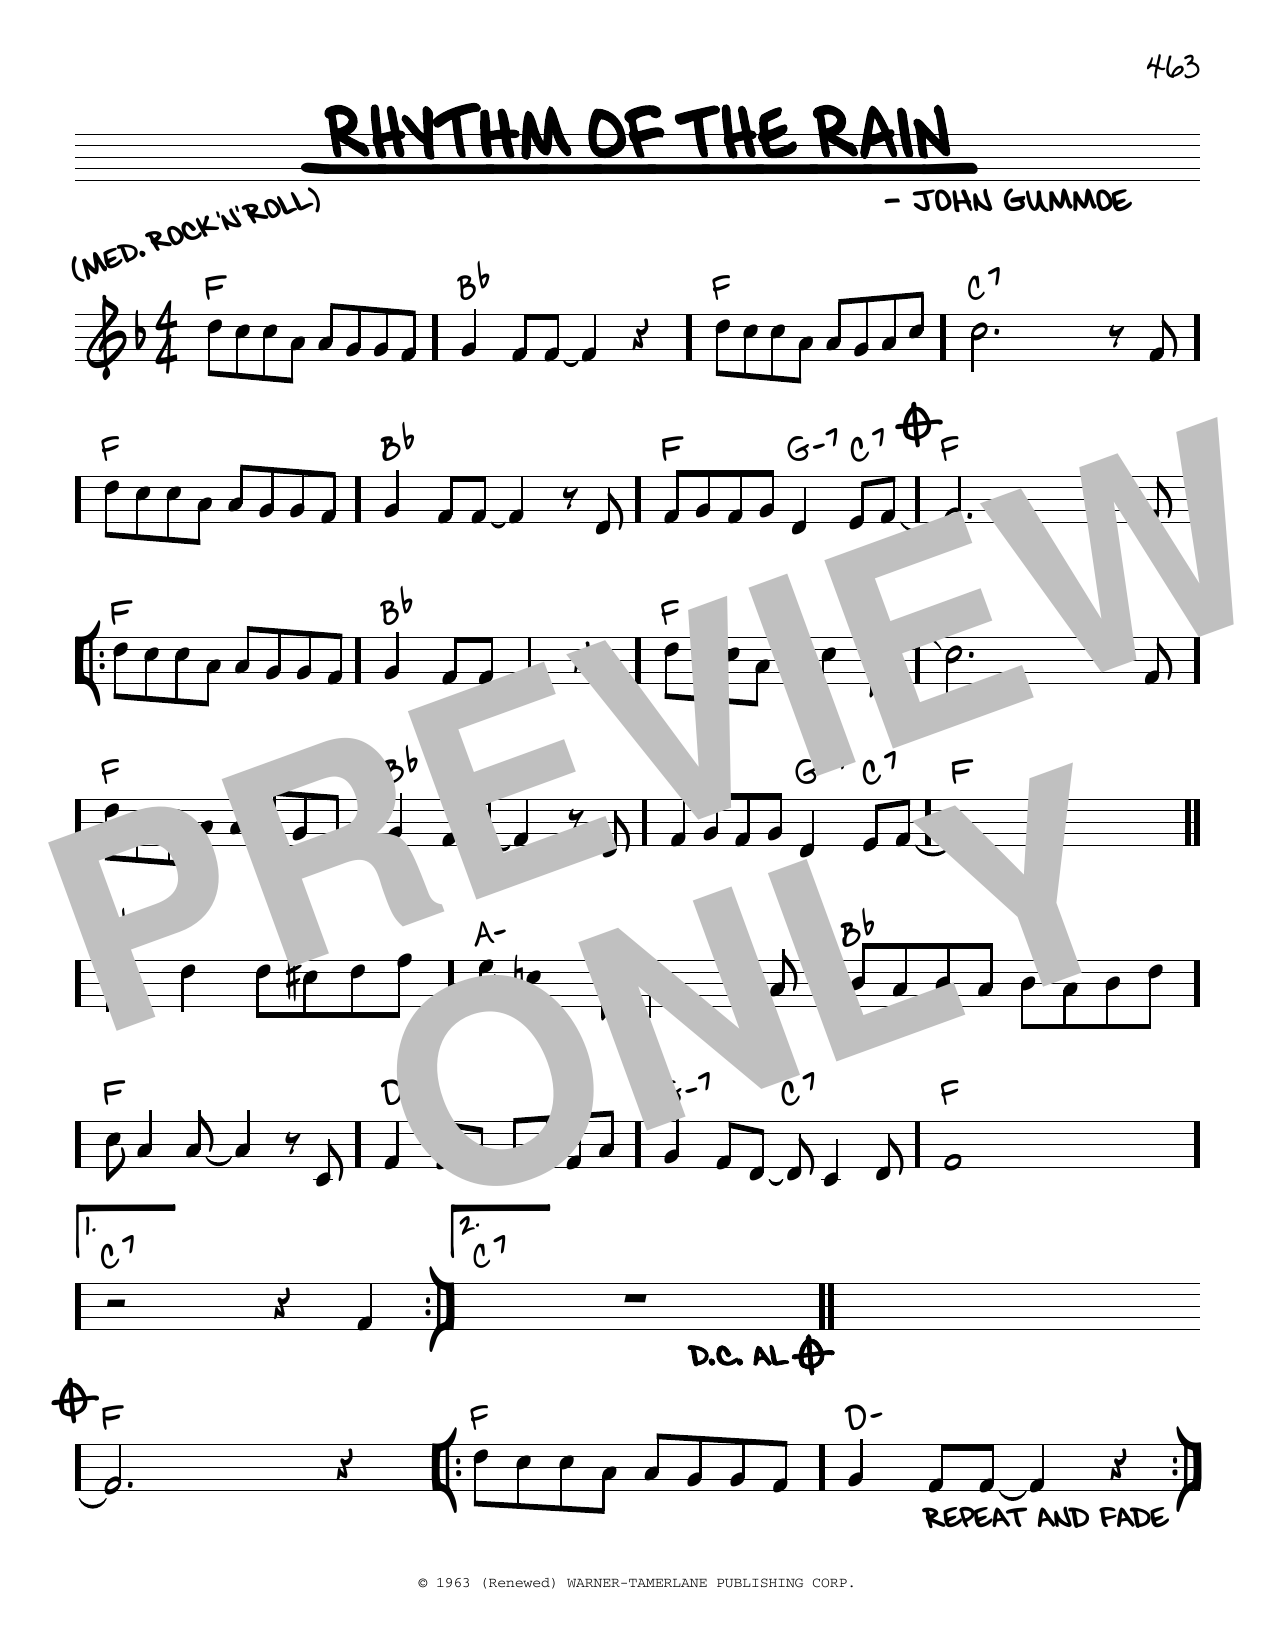 John Gummoe Rhythm Of The Rain Sheet Music Notes & Chords for Real Book – Melody & Chords - Download or Print PDF